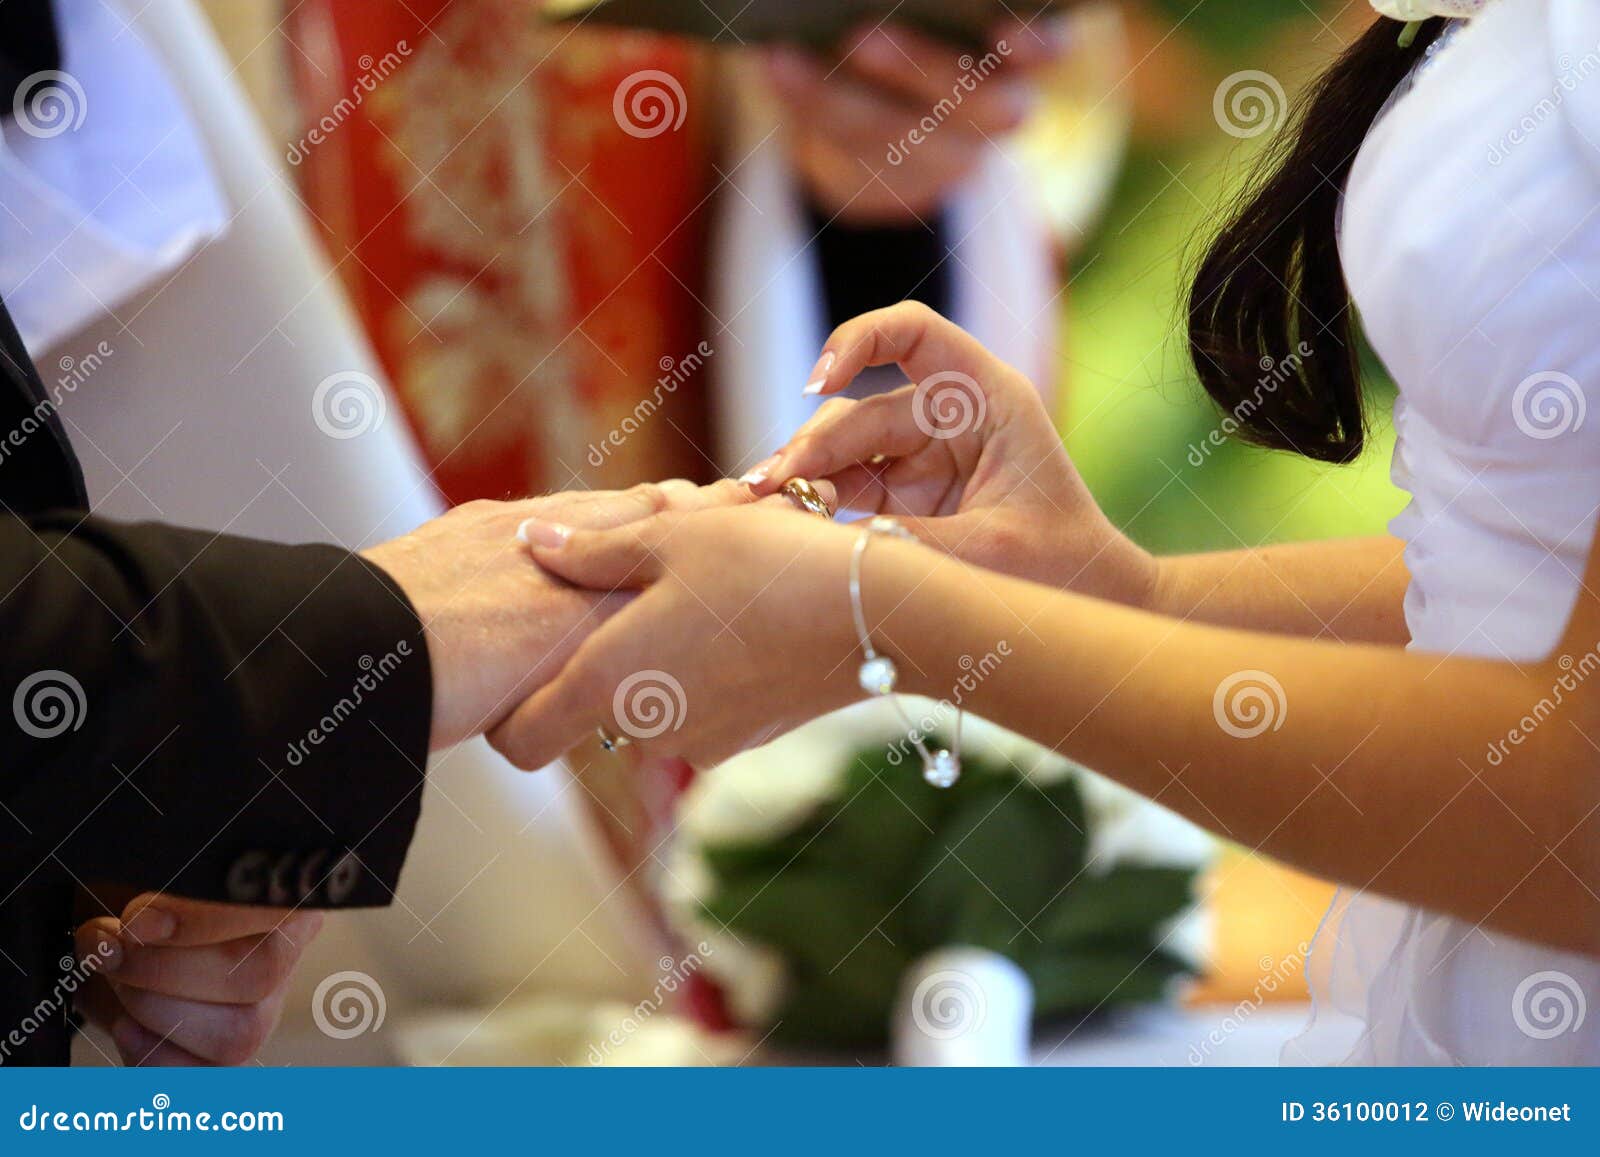 Catholic wedding exchange of rings